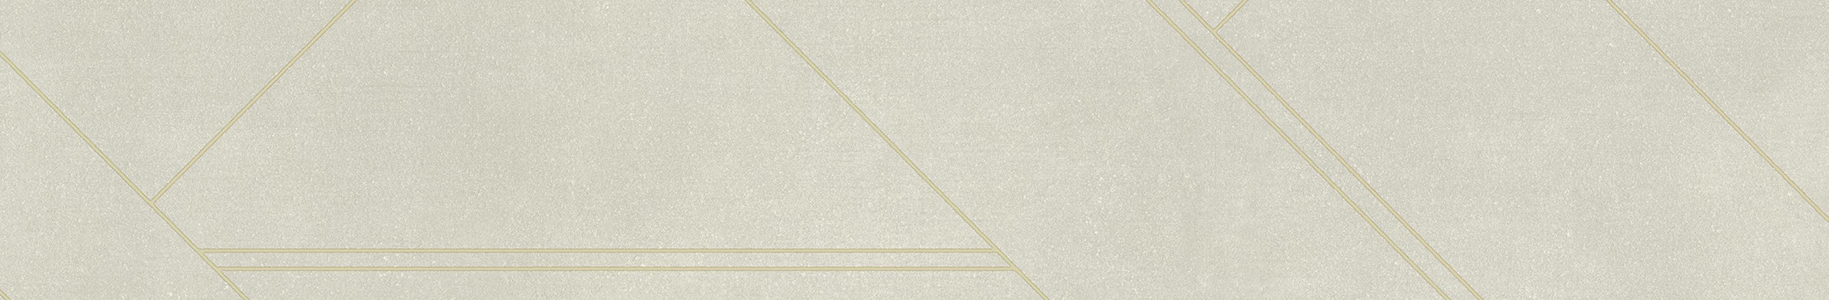 ES3411-15 川島織物セルコン 床タイル エグザストーン カワラパス 川島織物セルコン フロアタイル